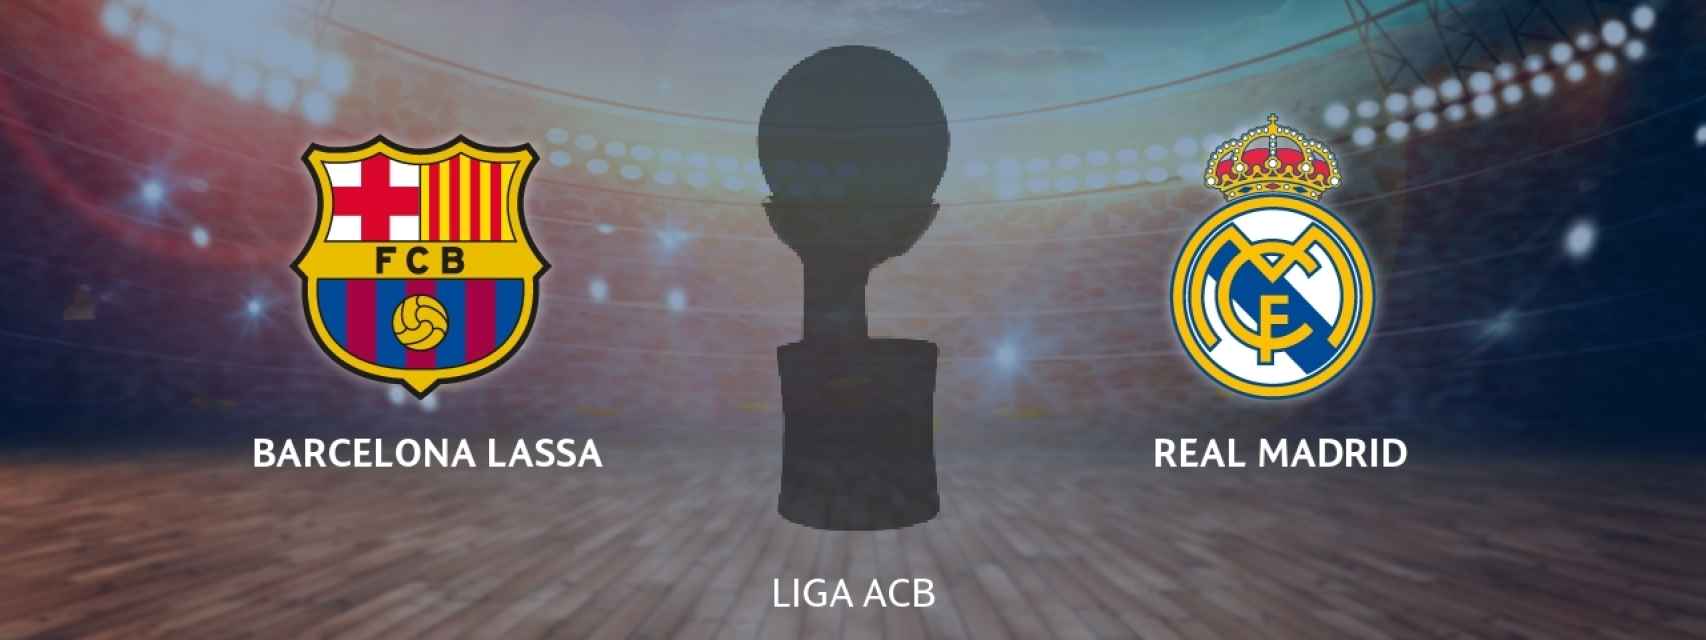 Barcelona Lassa - Real siga directo el tercer partido de la final la ACB